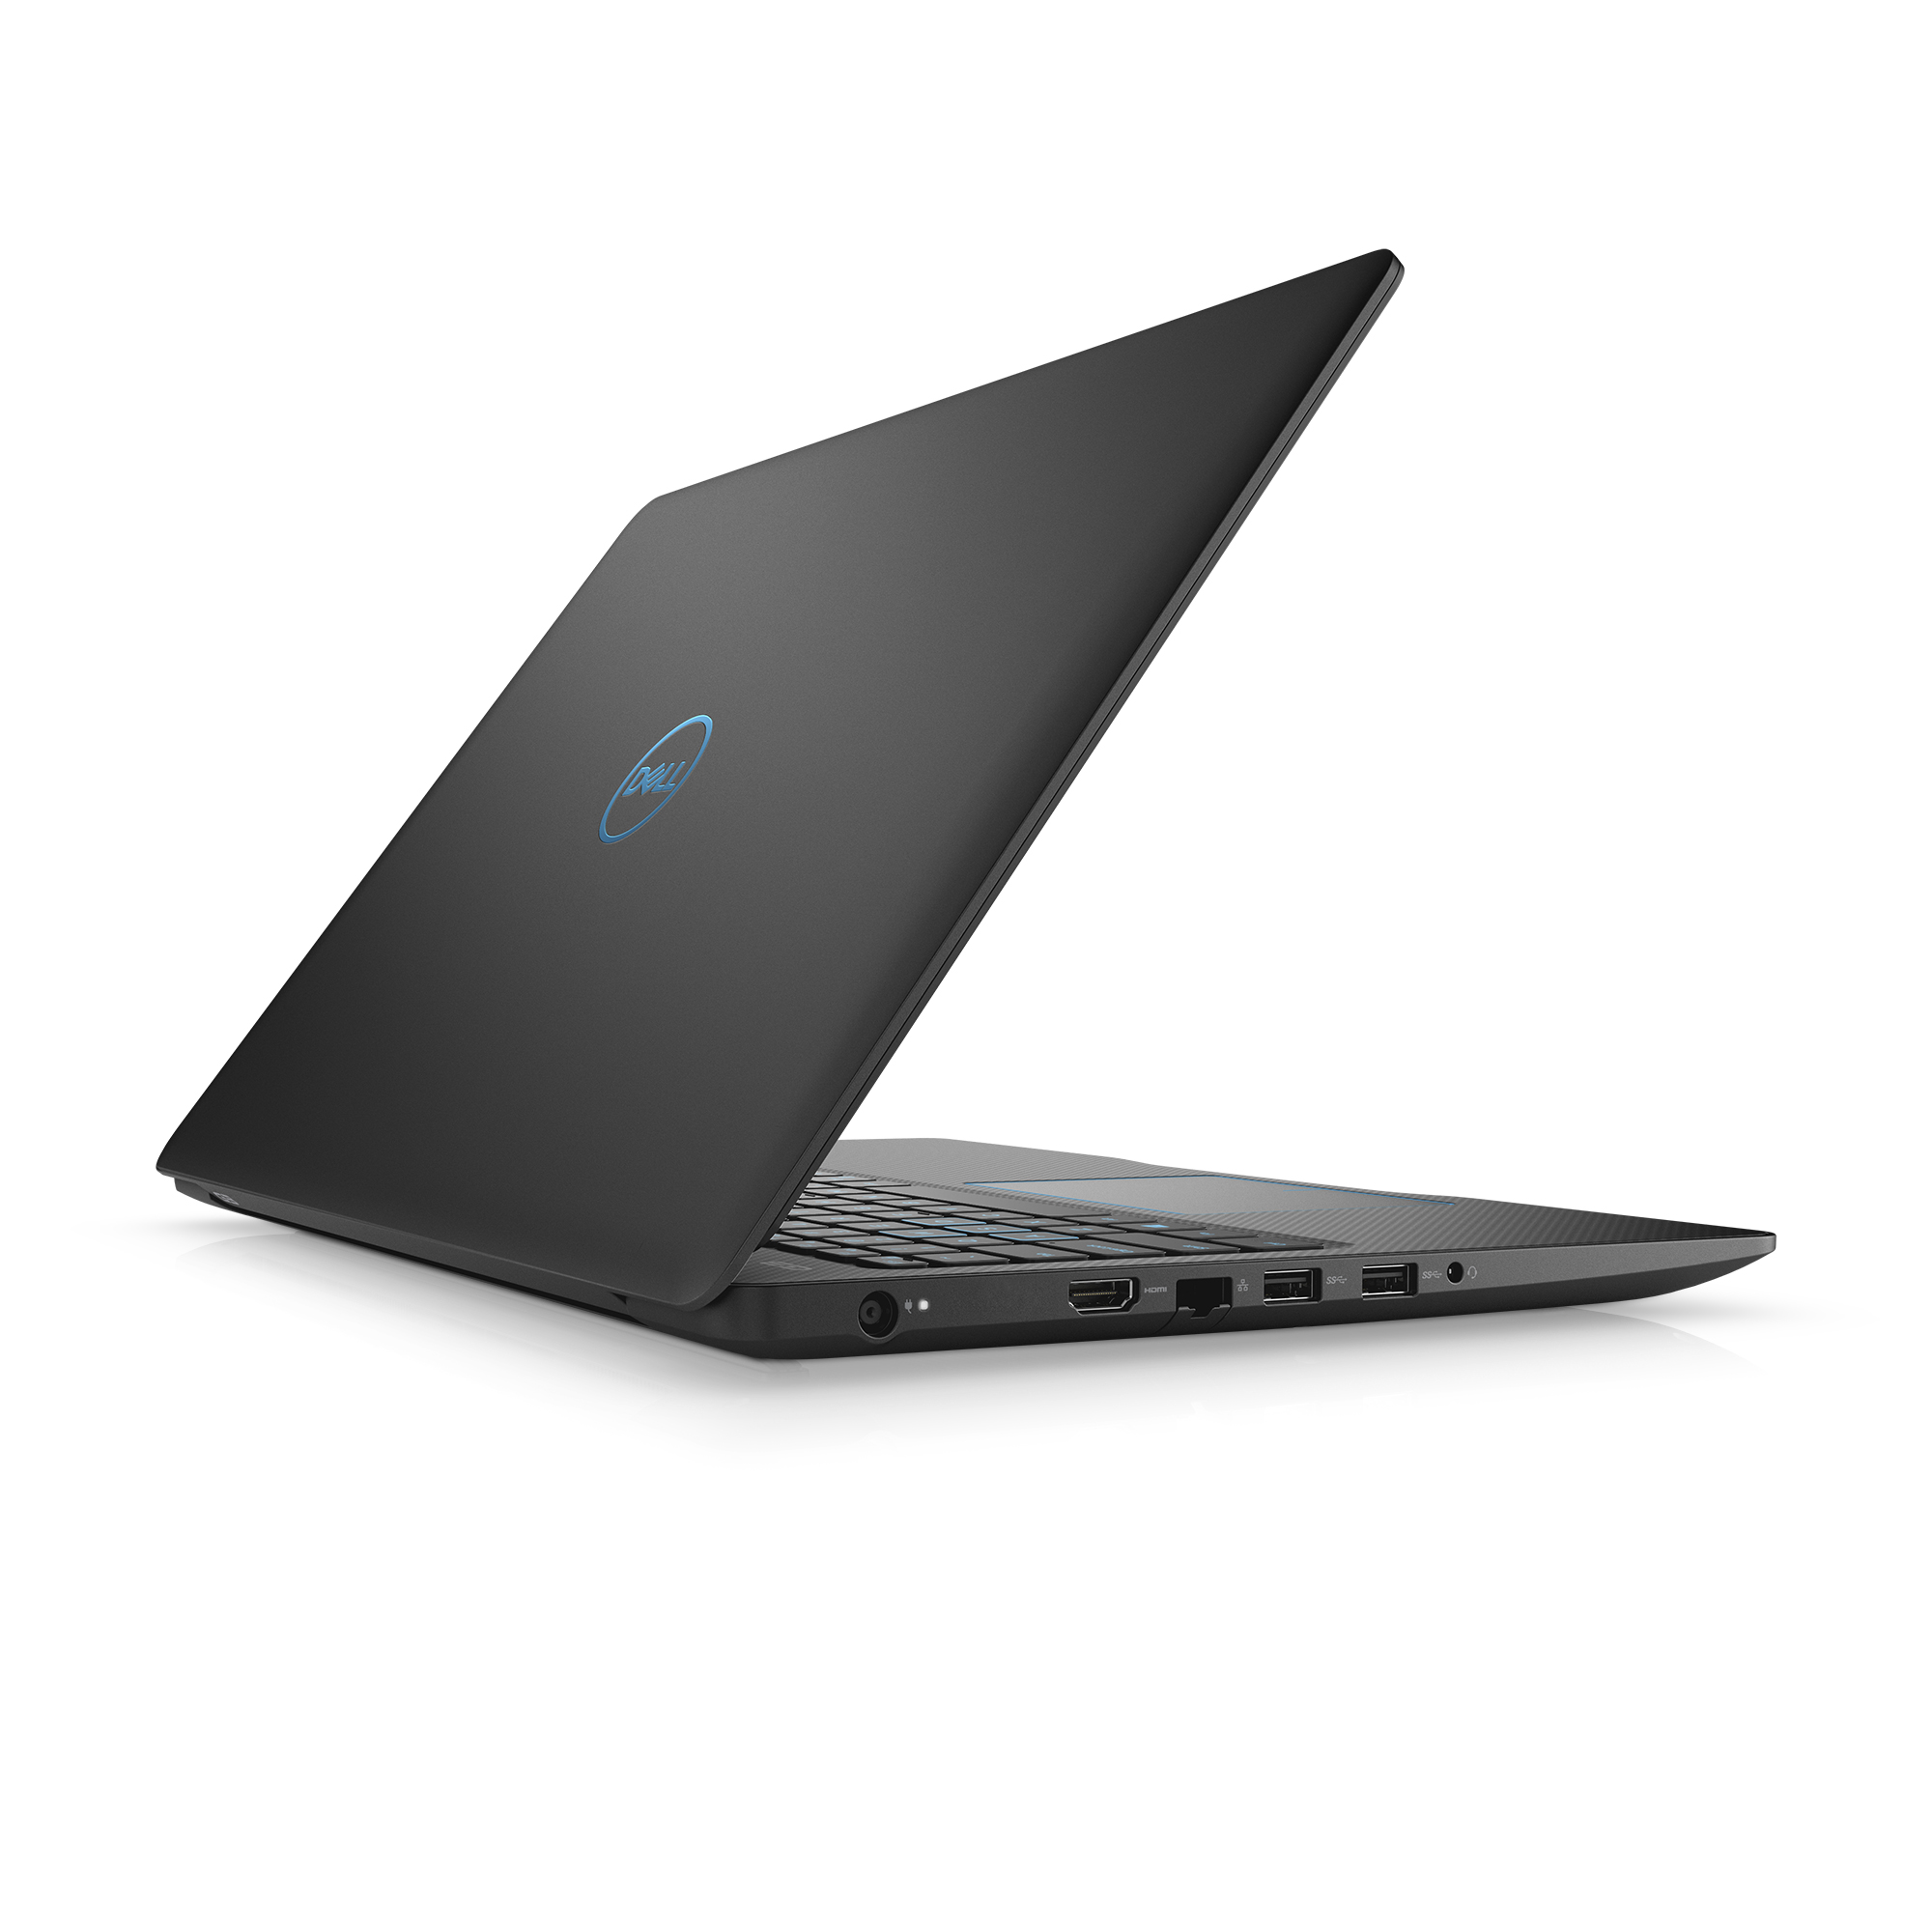 Dell G3 Gaming Laptop 15.6" Full HD, Intel Core i7-8750H, NVIDIA GeForce GTX 1050 Ti 4GB, 1TB HDD Storage, 24GB Total Memory (8GB + 16GB Intel Optane), G3579-7283BLK-PUS - image 4 of 6